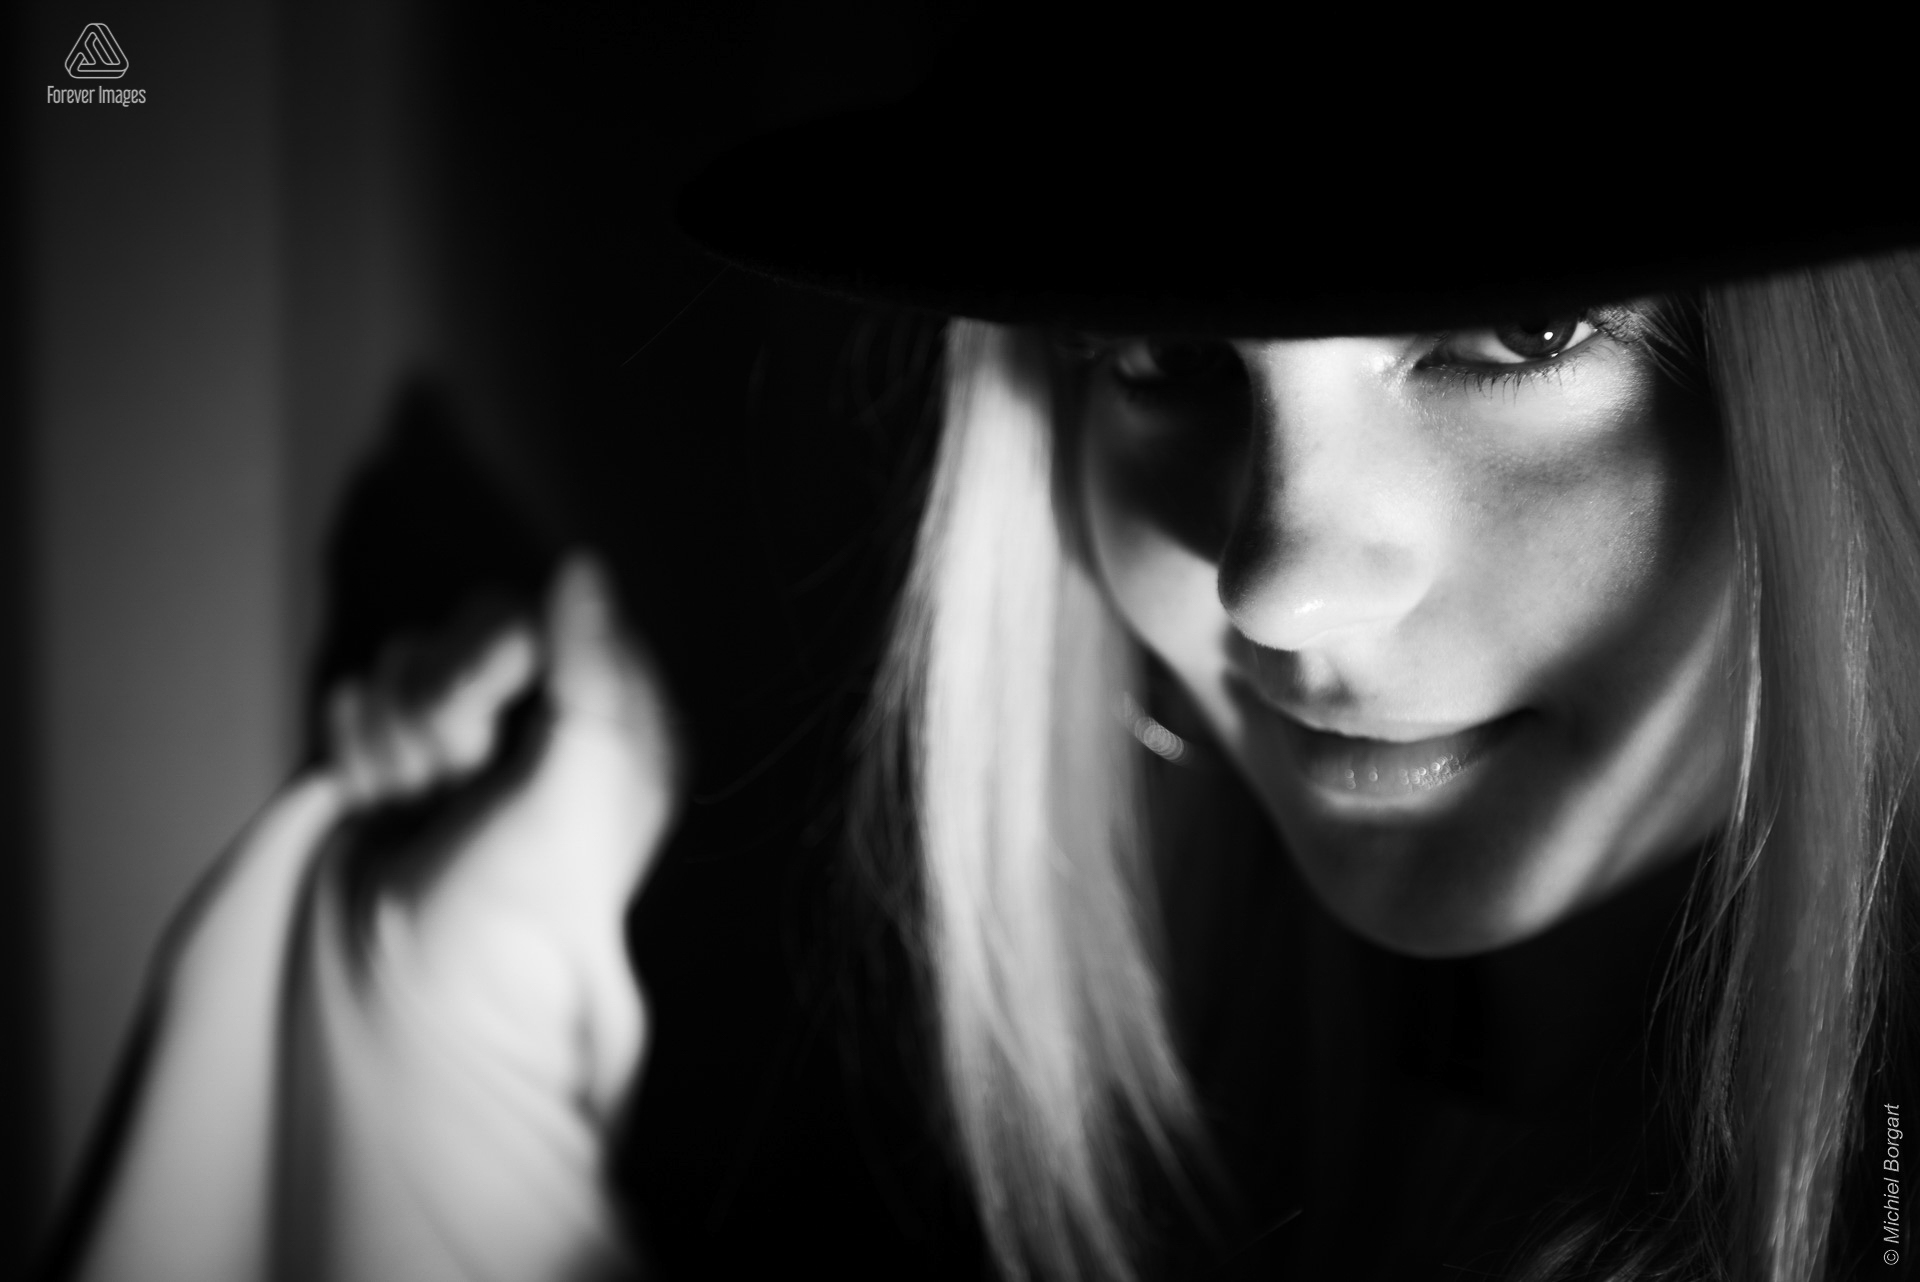 Portretfoto zwart-wit low key jonge dame zwarte hoed scherpe blik | Porscha Luna de Jong Happyhappyjoyjoy | Portretfotograaf Michiel Borgart - Forever Images.